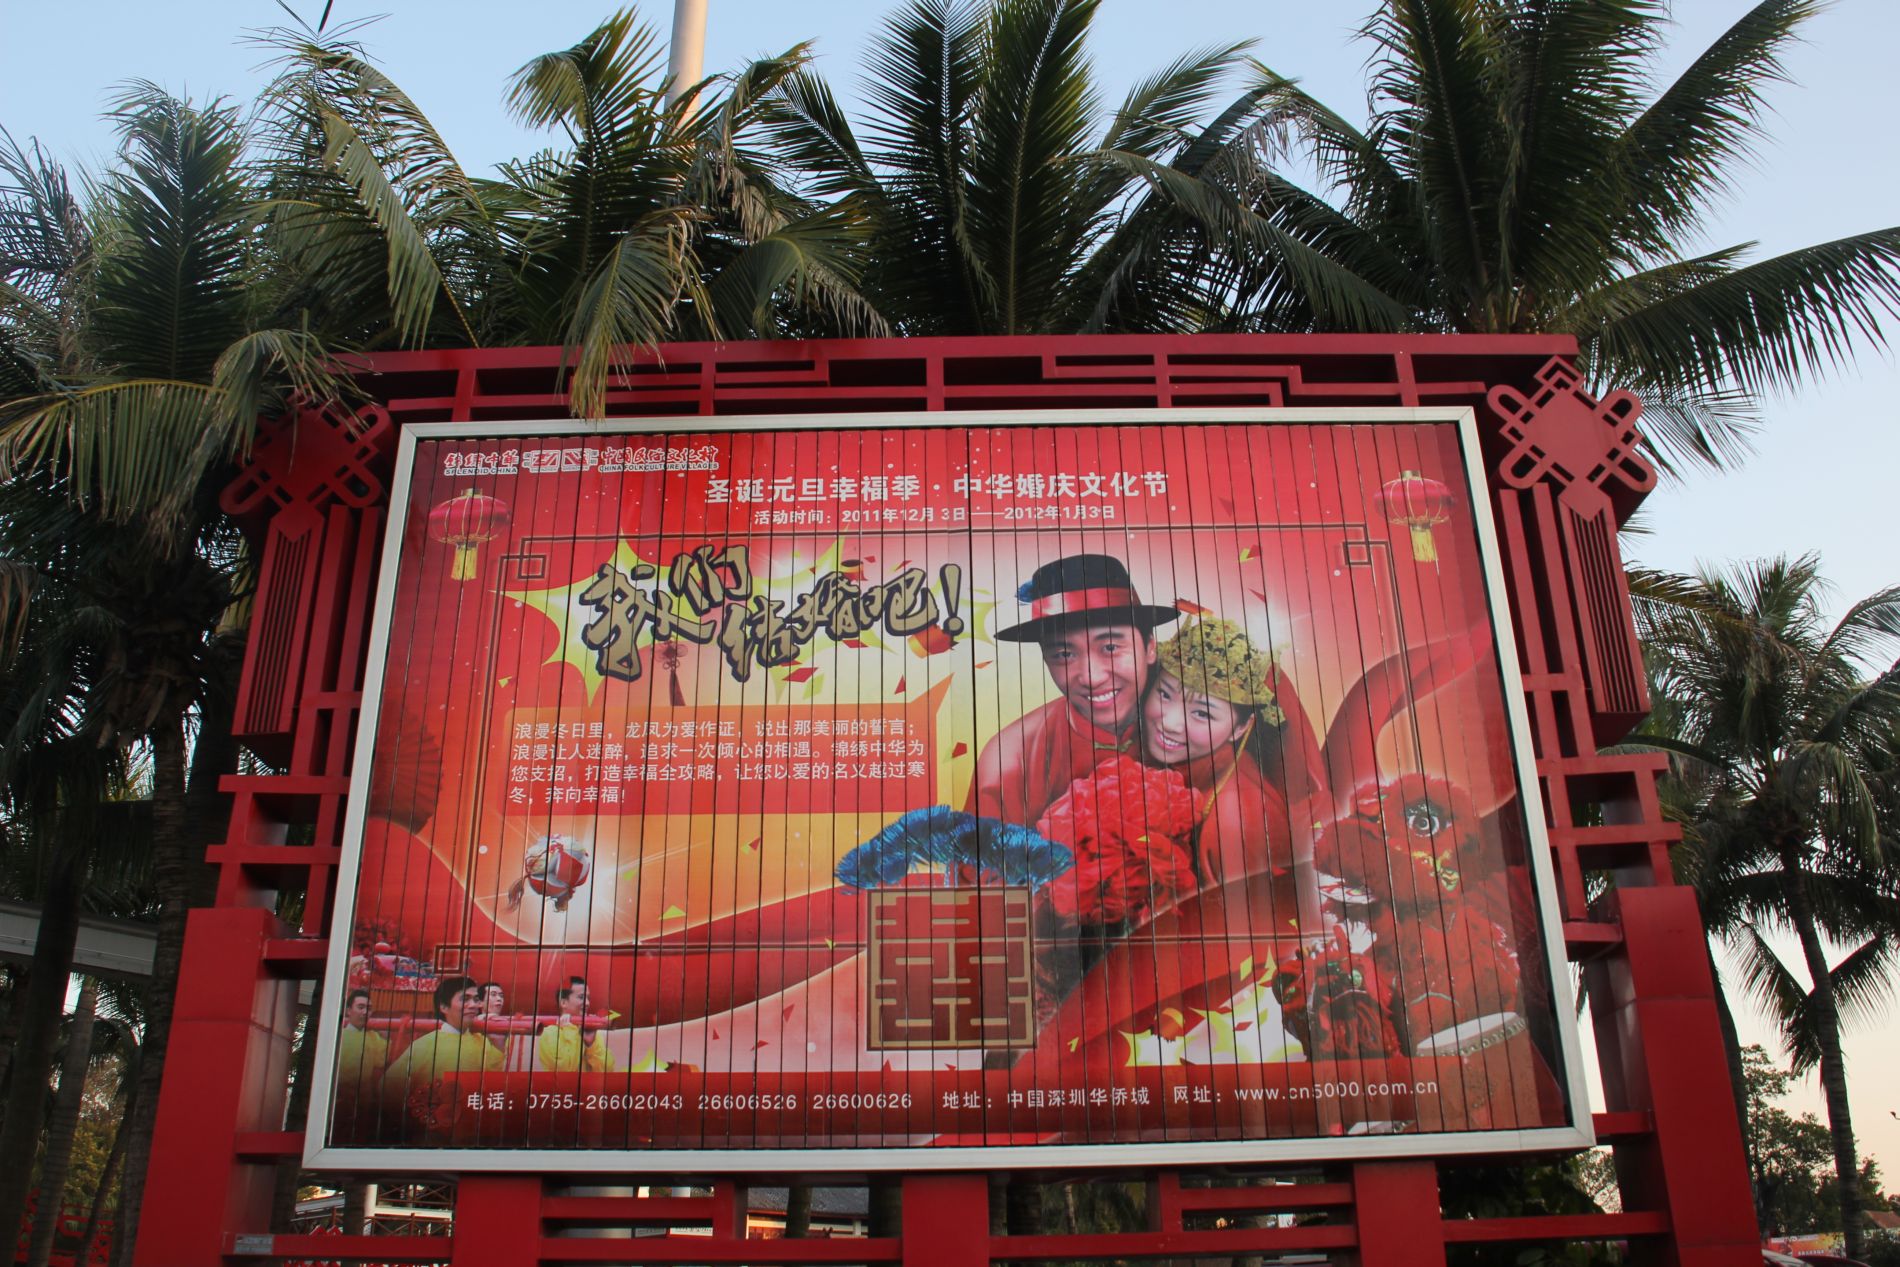 A billboard in Shenzhen advertises Splendid China.